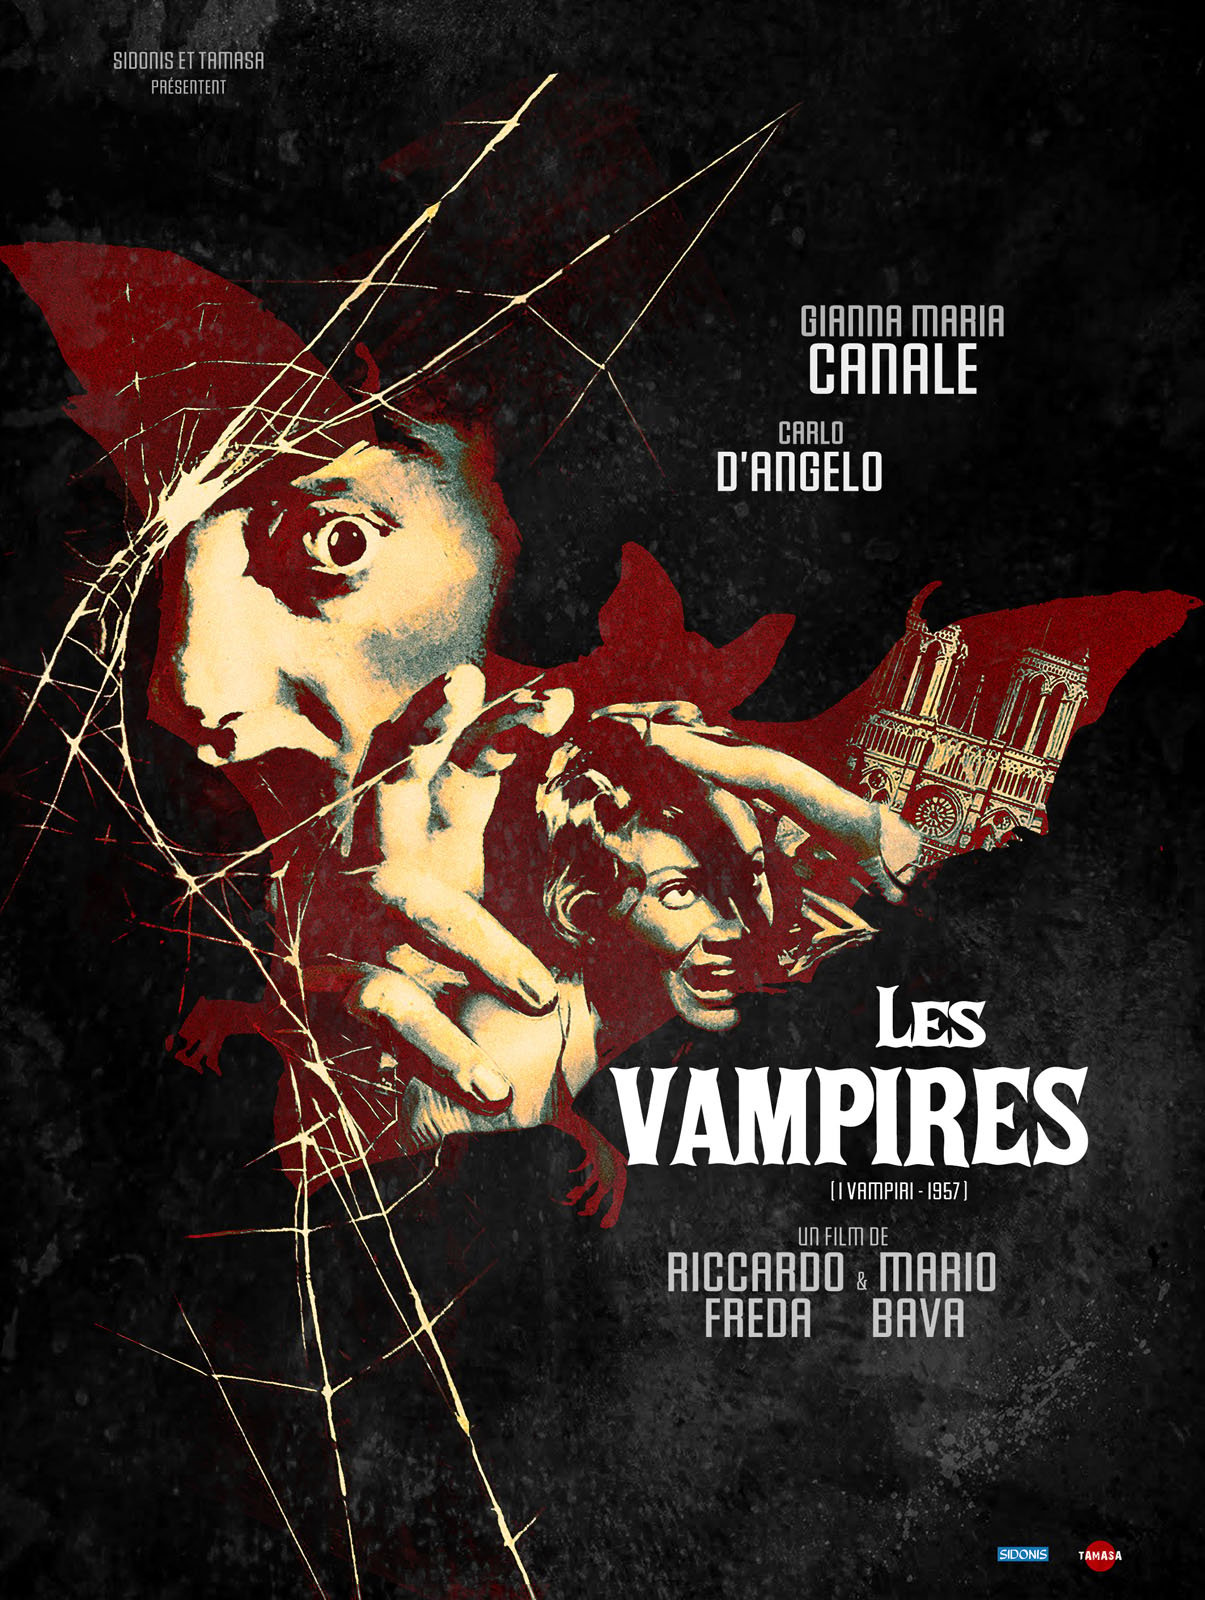 Les Vampires streaming